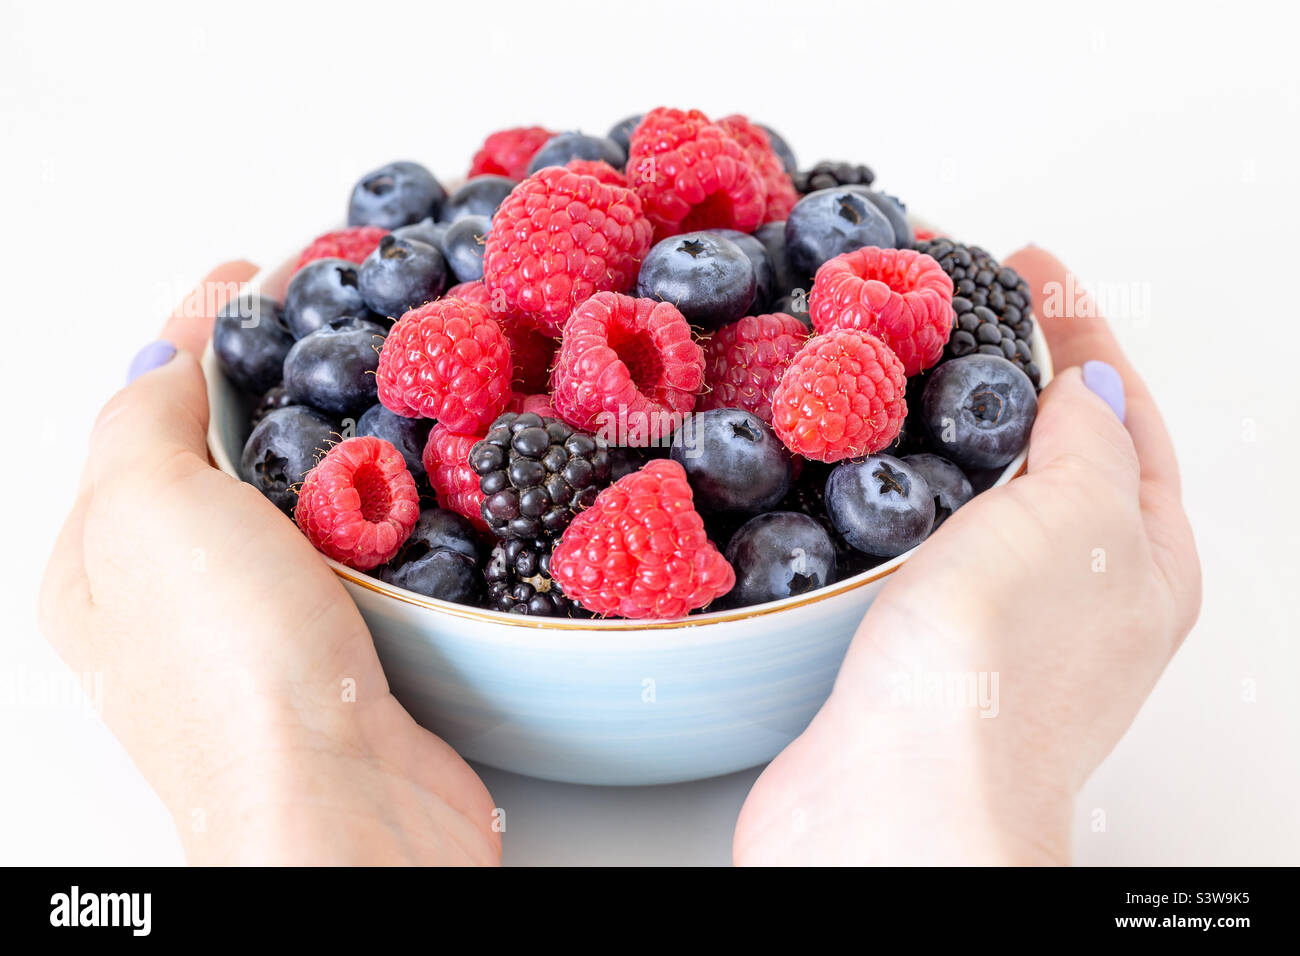 Bowl of fresh berries in hands, healthy breakfast option Stock Photo